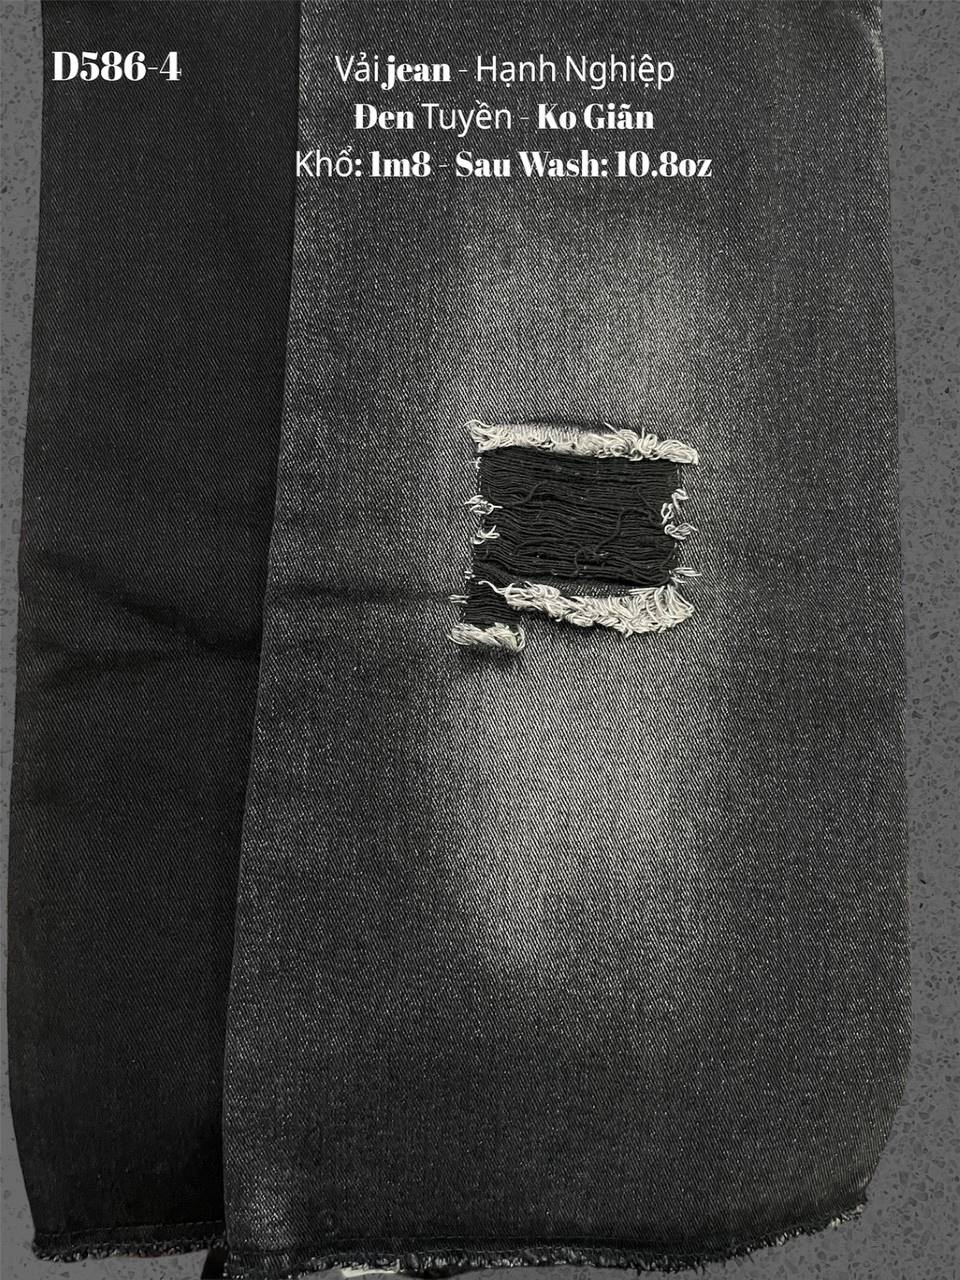 Vải Jean Cotton 10X7 - D586-4 đen 2 mặt